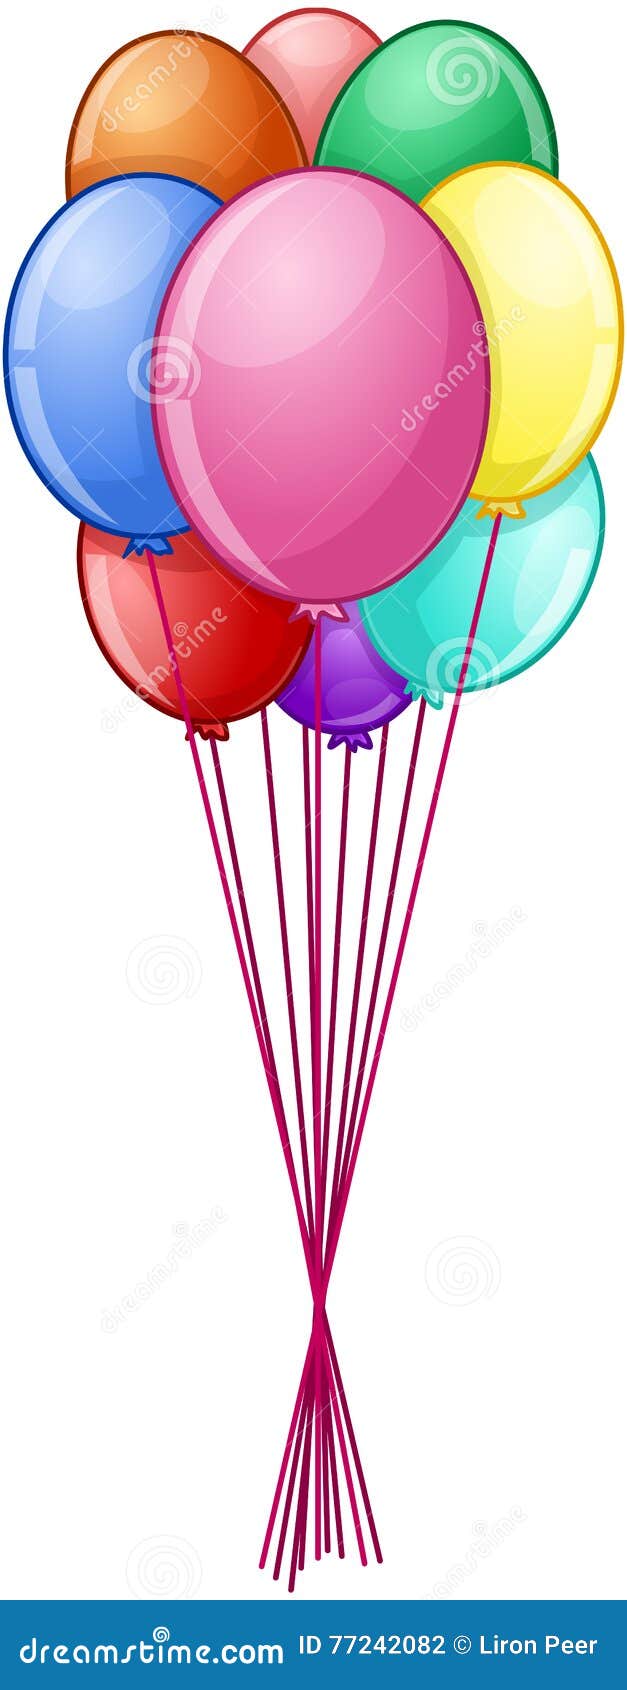 https://thumbs.dreamstime.com/z/colorful-balloons-string-vector-illustration-strings-77242082.jpg